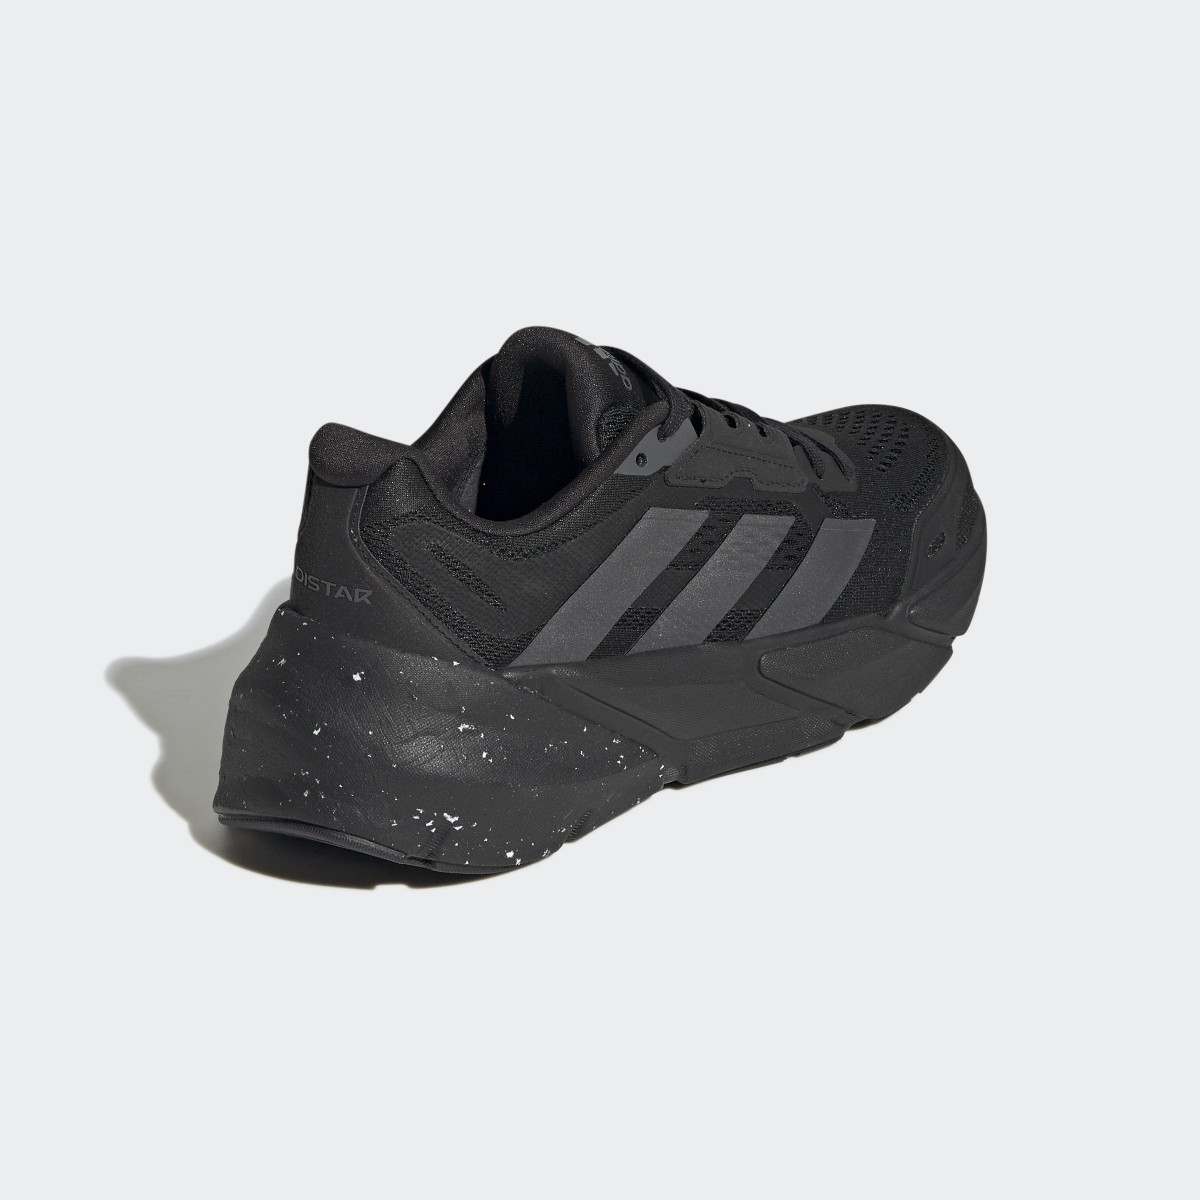 Adidas Adistar Shoes. 9